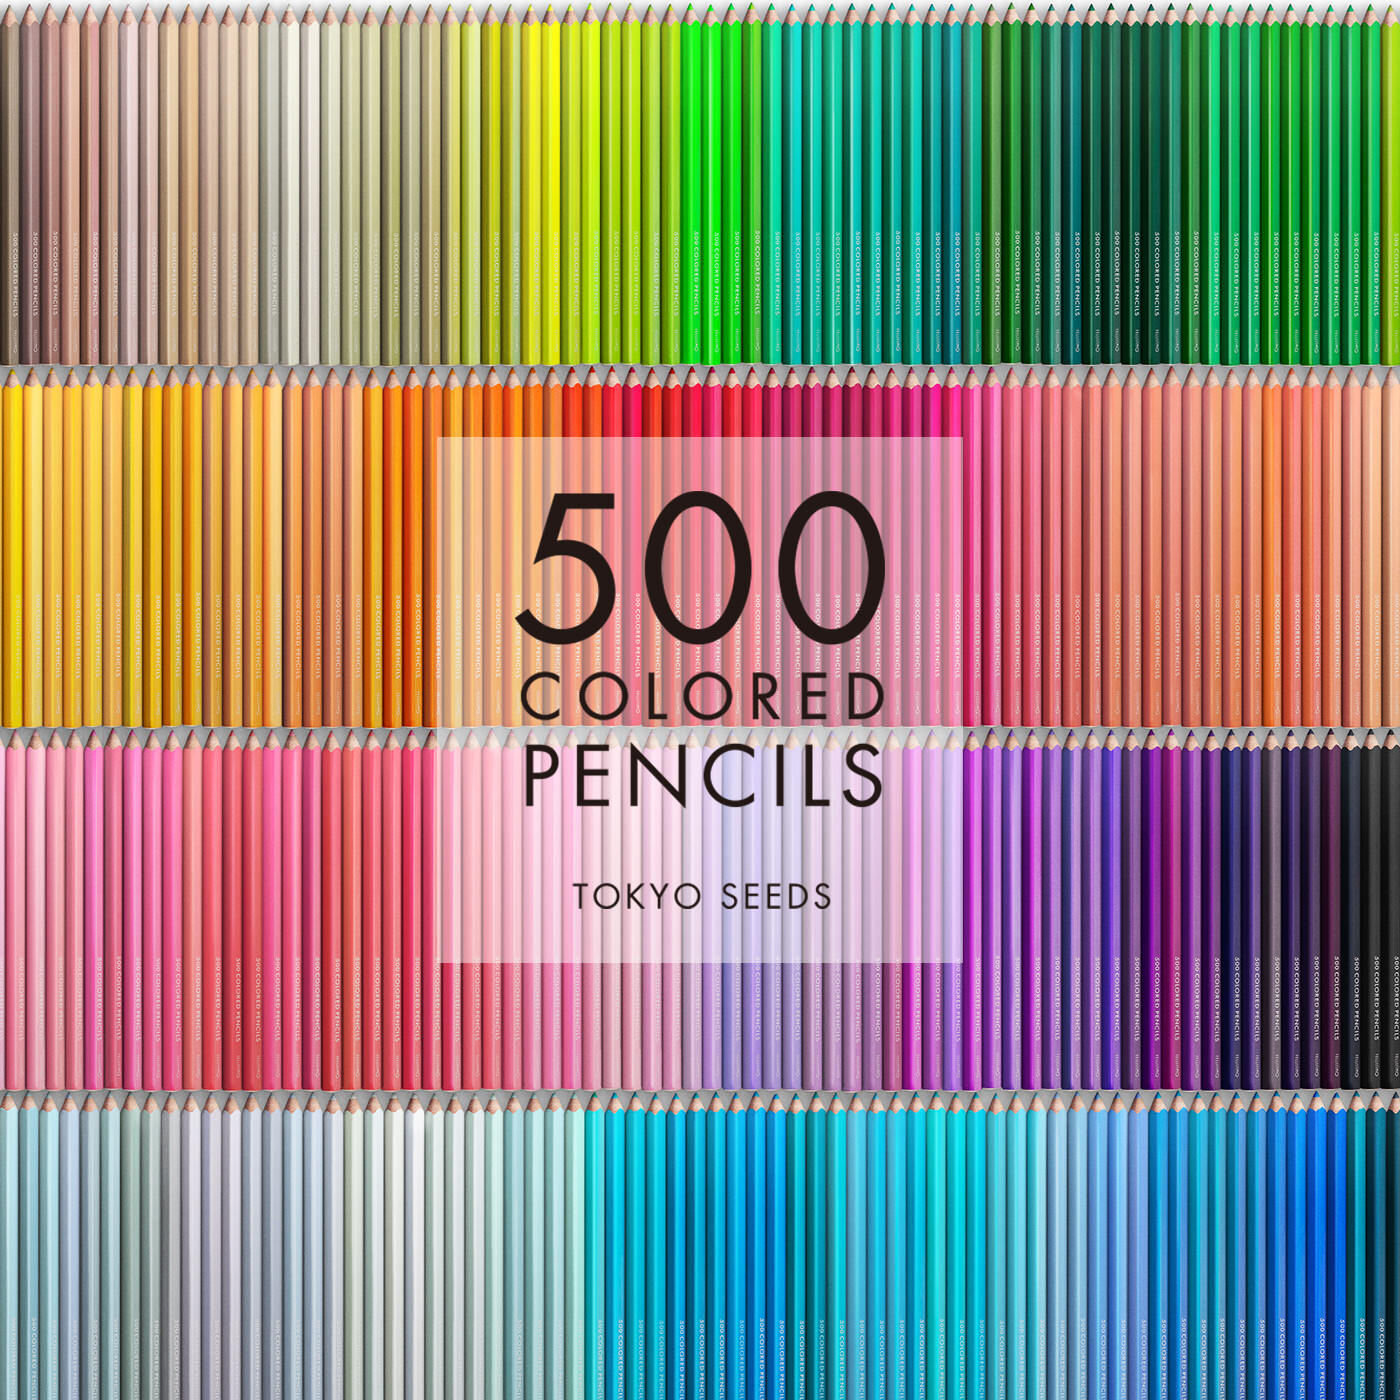 Real Stock|【412/500 HUSH DARLING】500色の色えんぴつ TOKYO SEEDS|1992年、世界初の「500色」という膨大な色数の色えんぴつが誕生して以来、その販売数は発売当初から合わせると、世界55ヵ国10万セット以上。今回、メイド・イン・ジャパンにこだわり、すべてが新しく生まれ変わって登場しました。